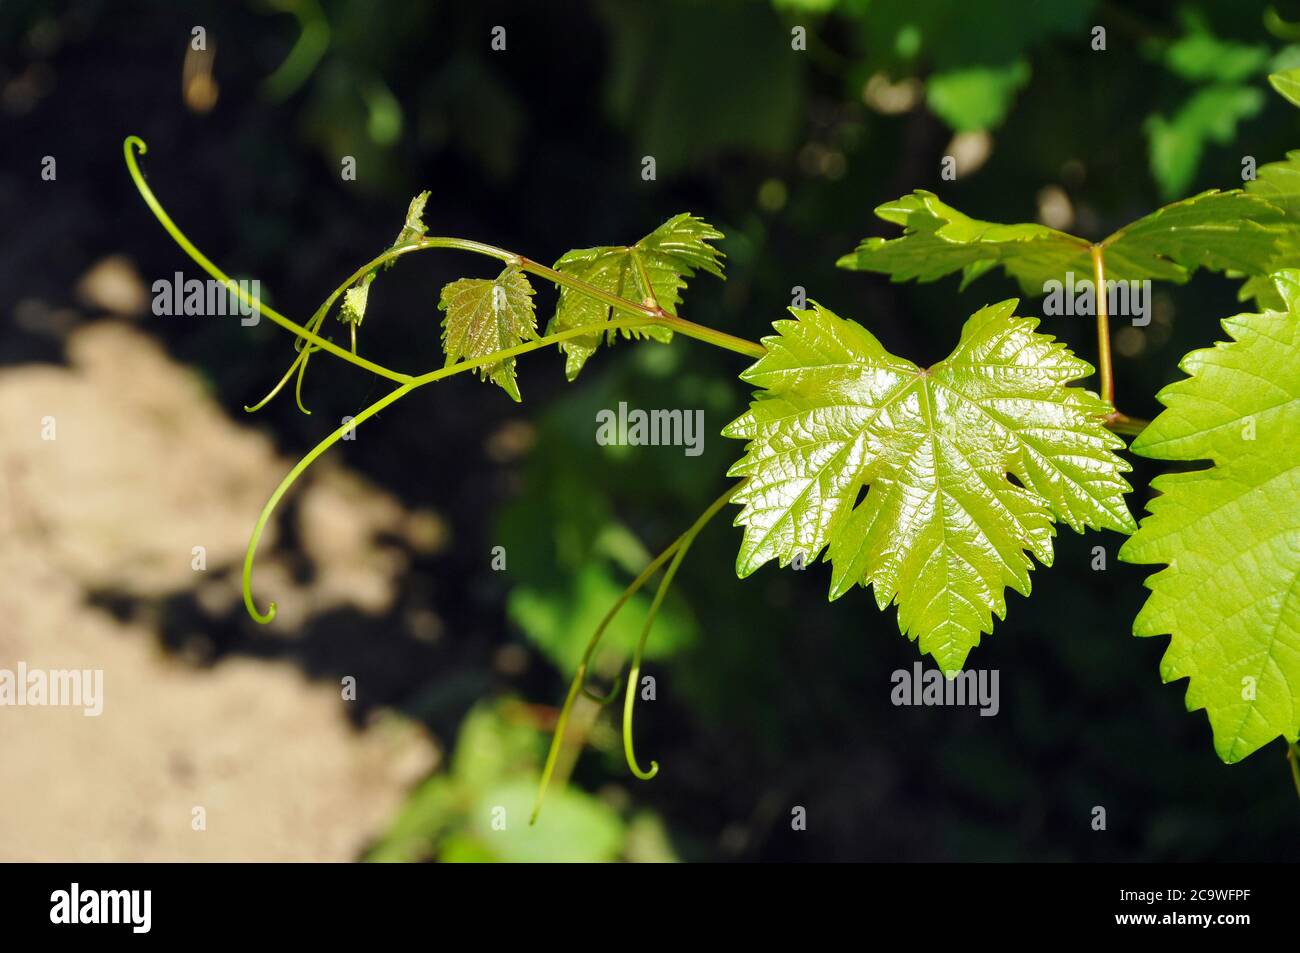 common grape vine, Weinrebe, bortermő szőlő, Vitis vinifera Stock Photo